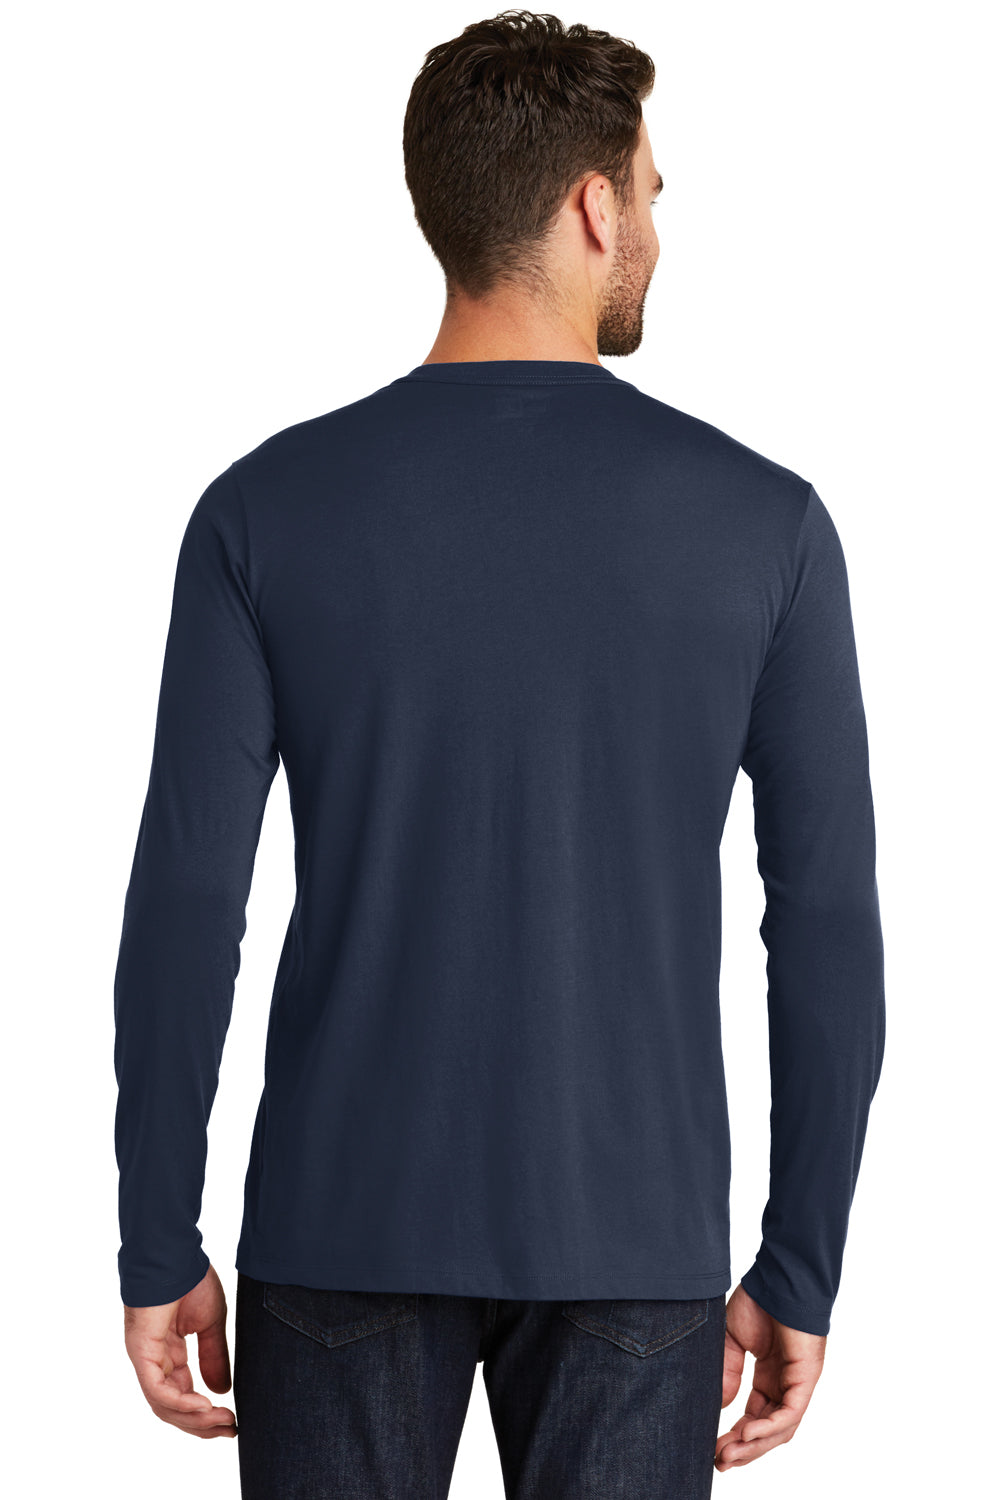 New Era NEA102 Mens Heritage Long Sleeve Crewneck T-Shirt Navy Blue Back